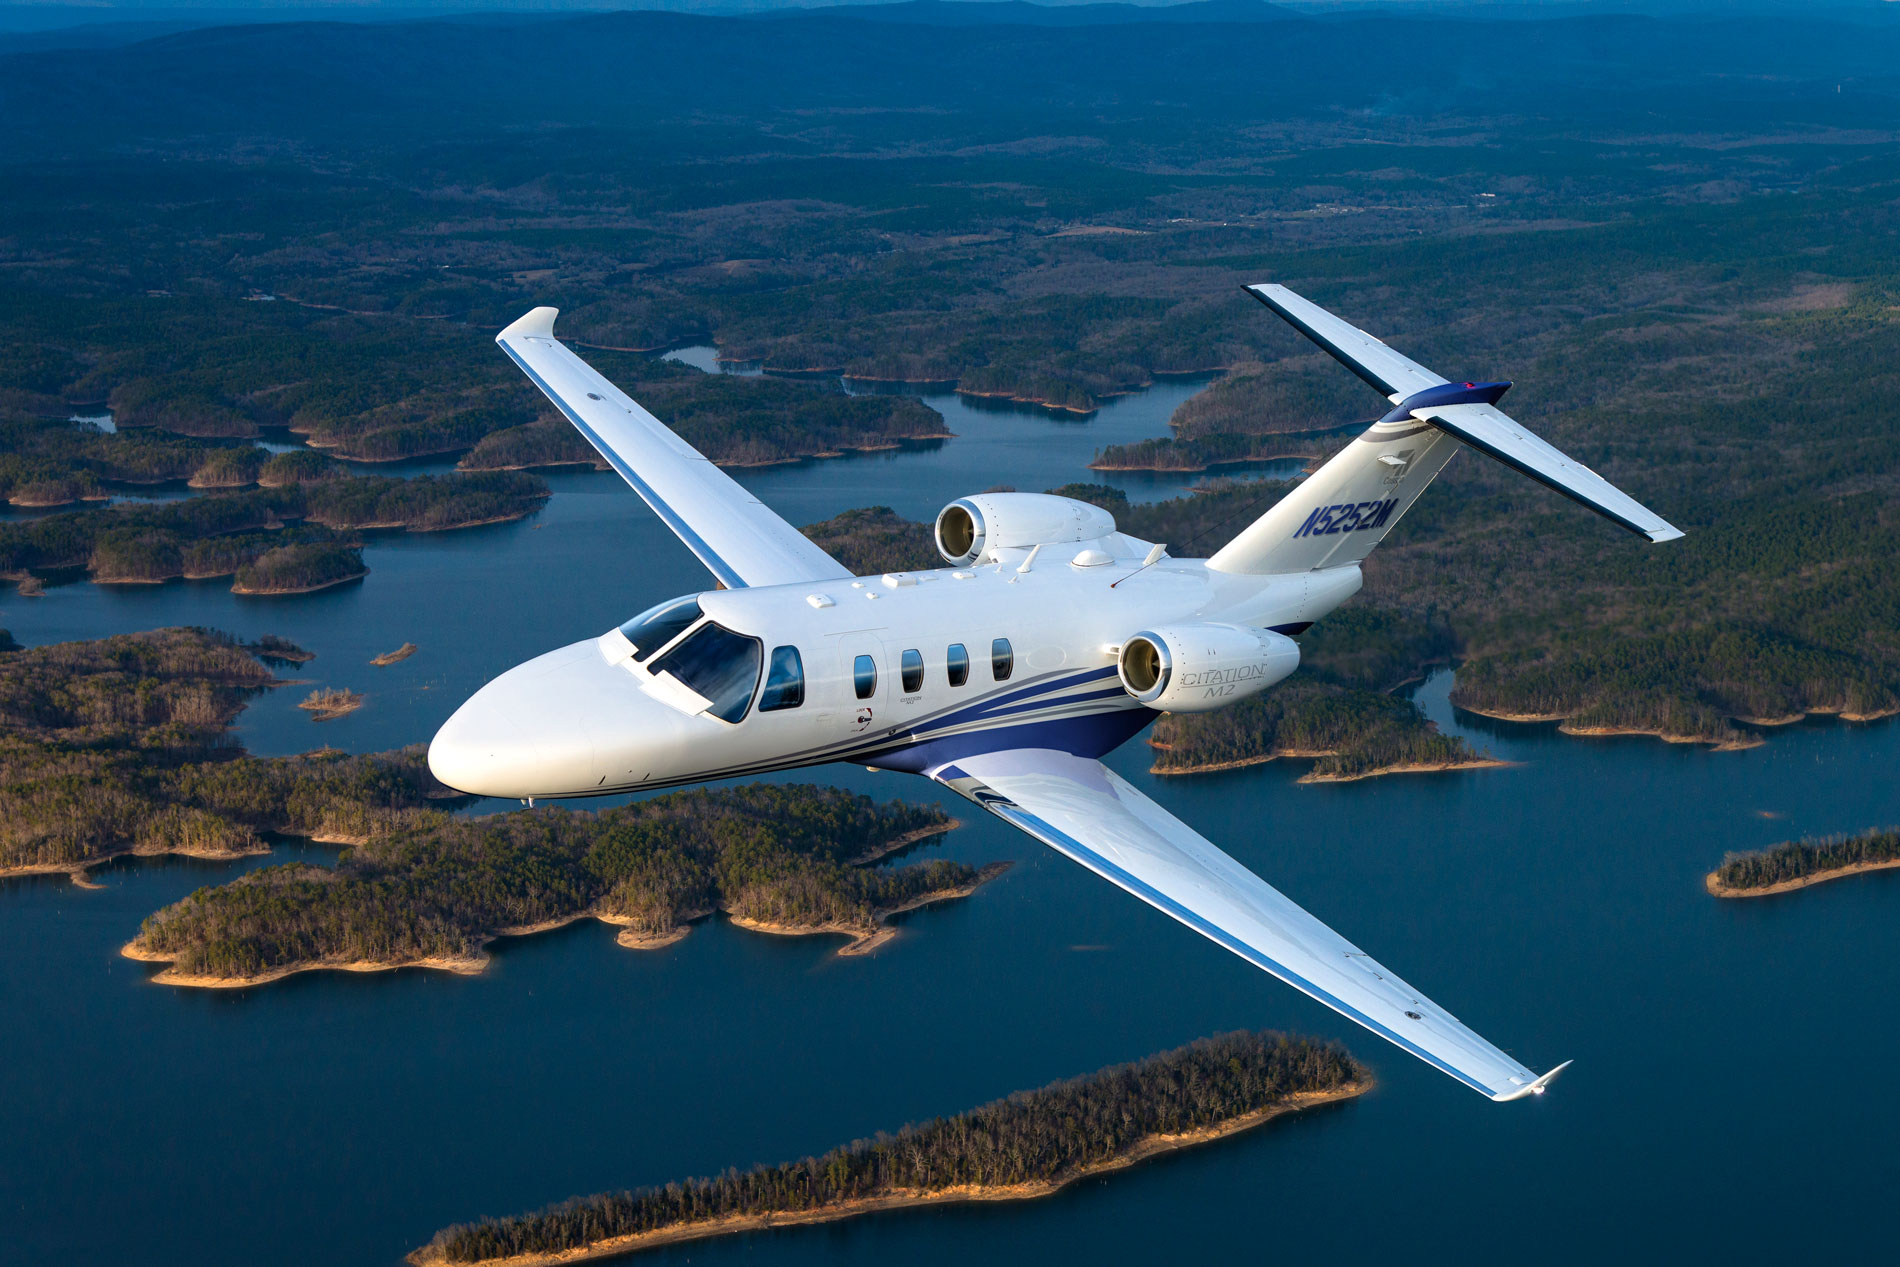 First Cessna Citation M2 Gen2 enters into service following FAA certification